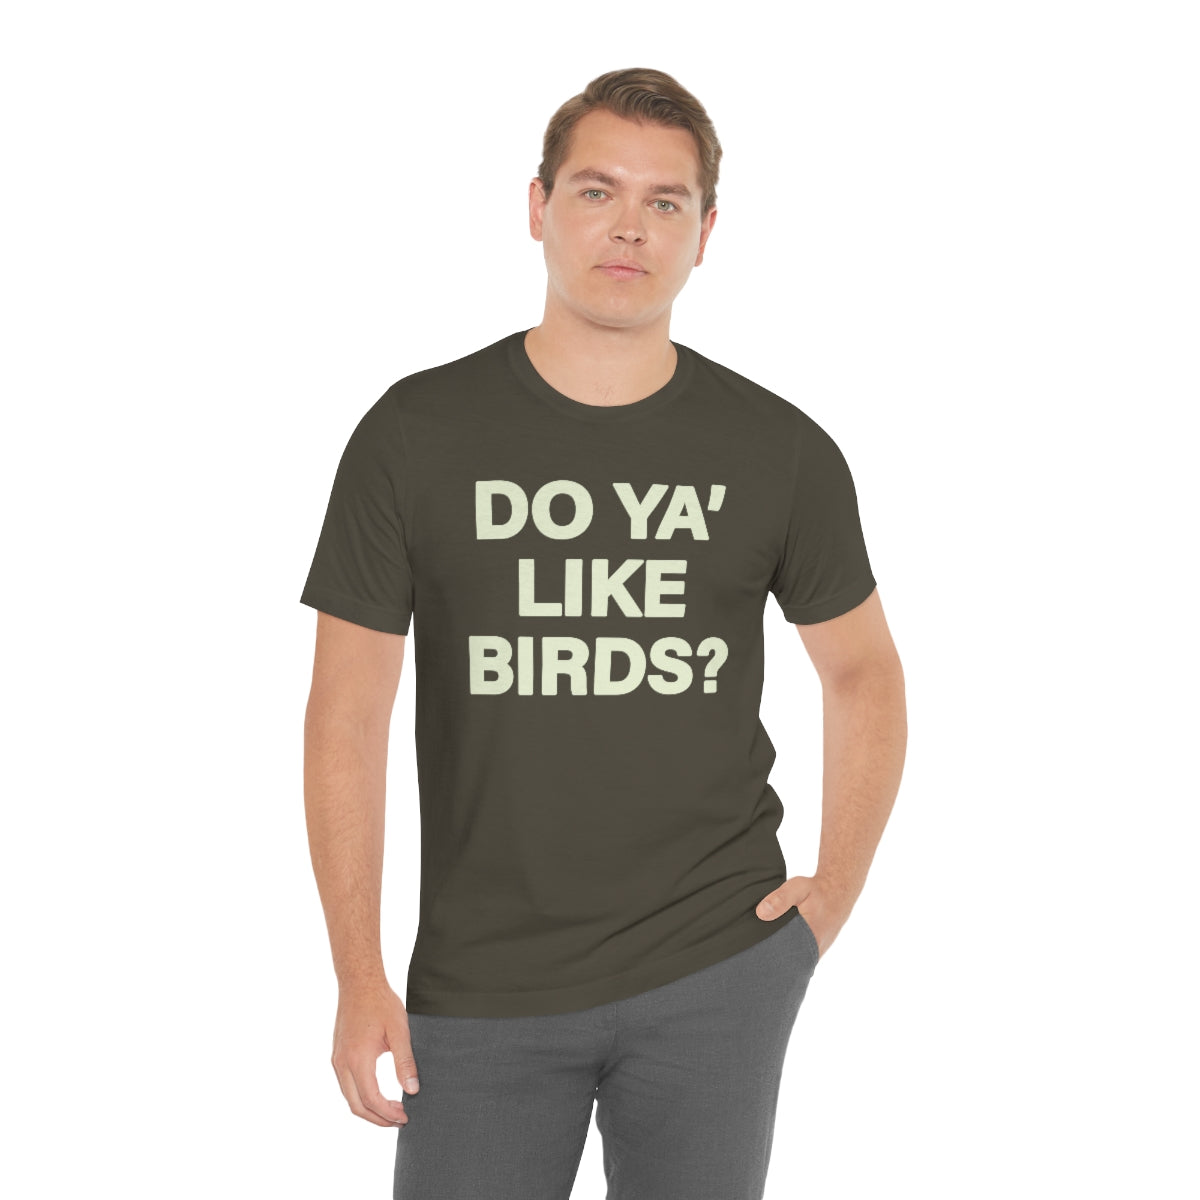 Like Birds?